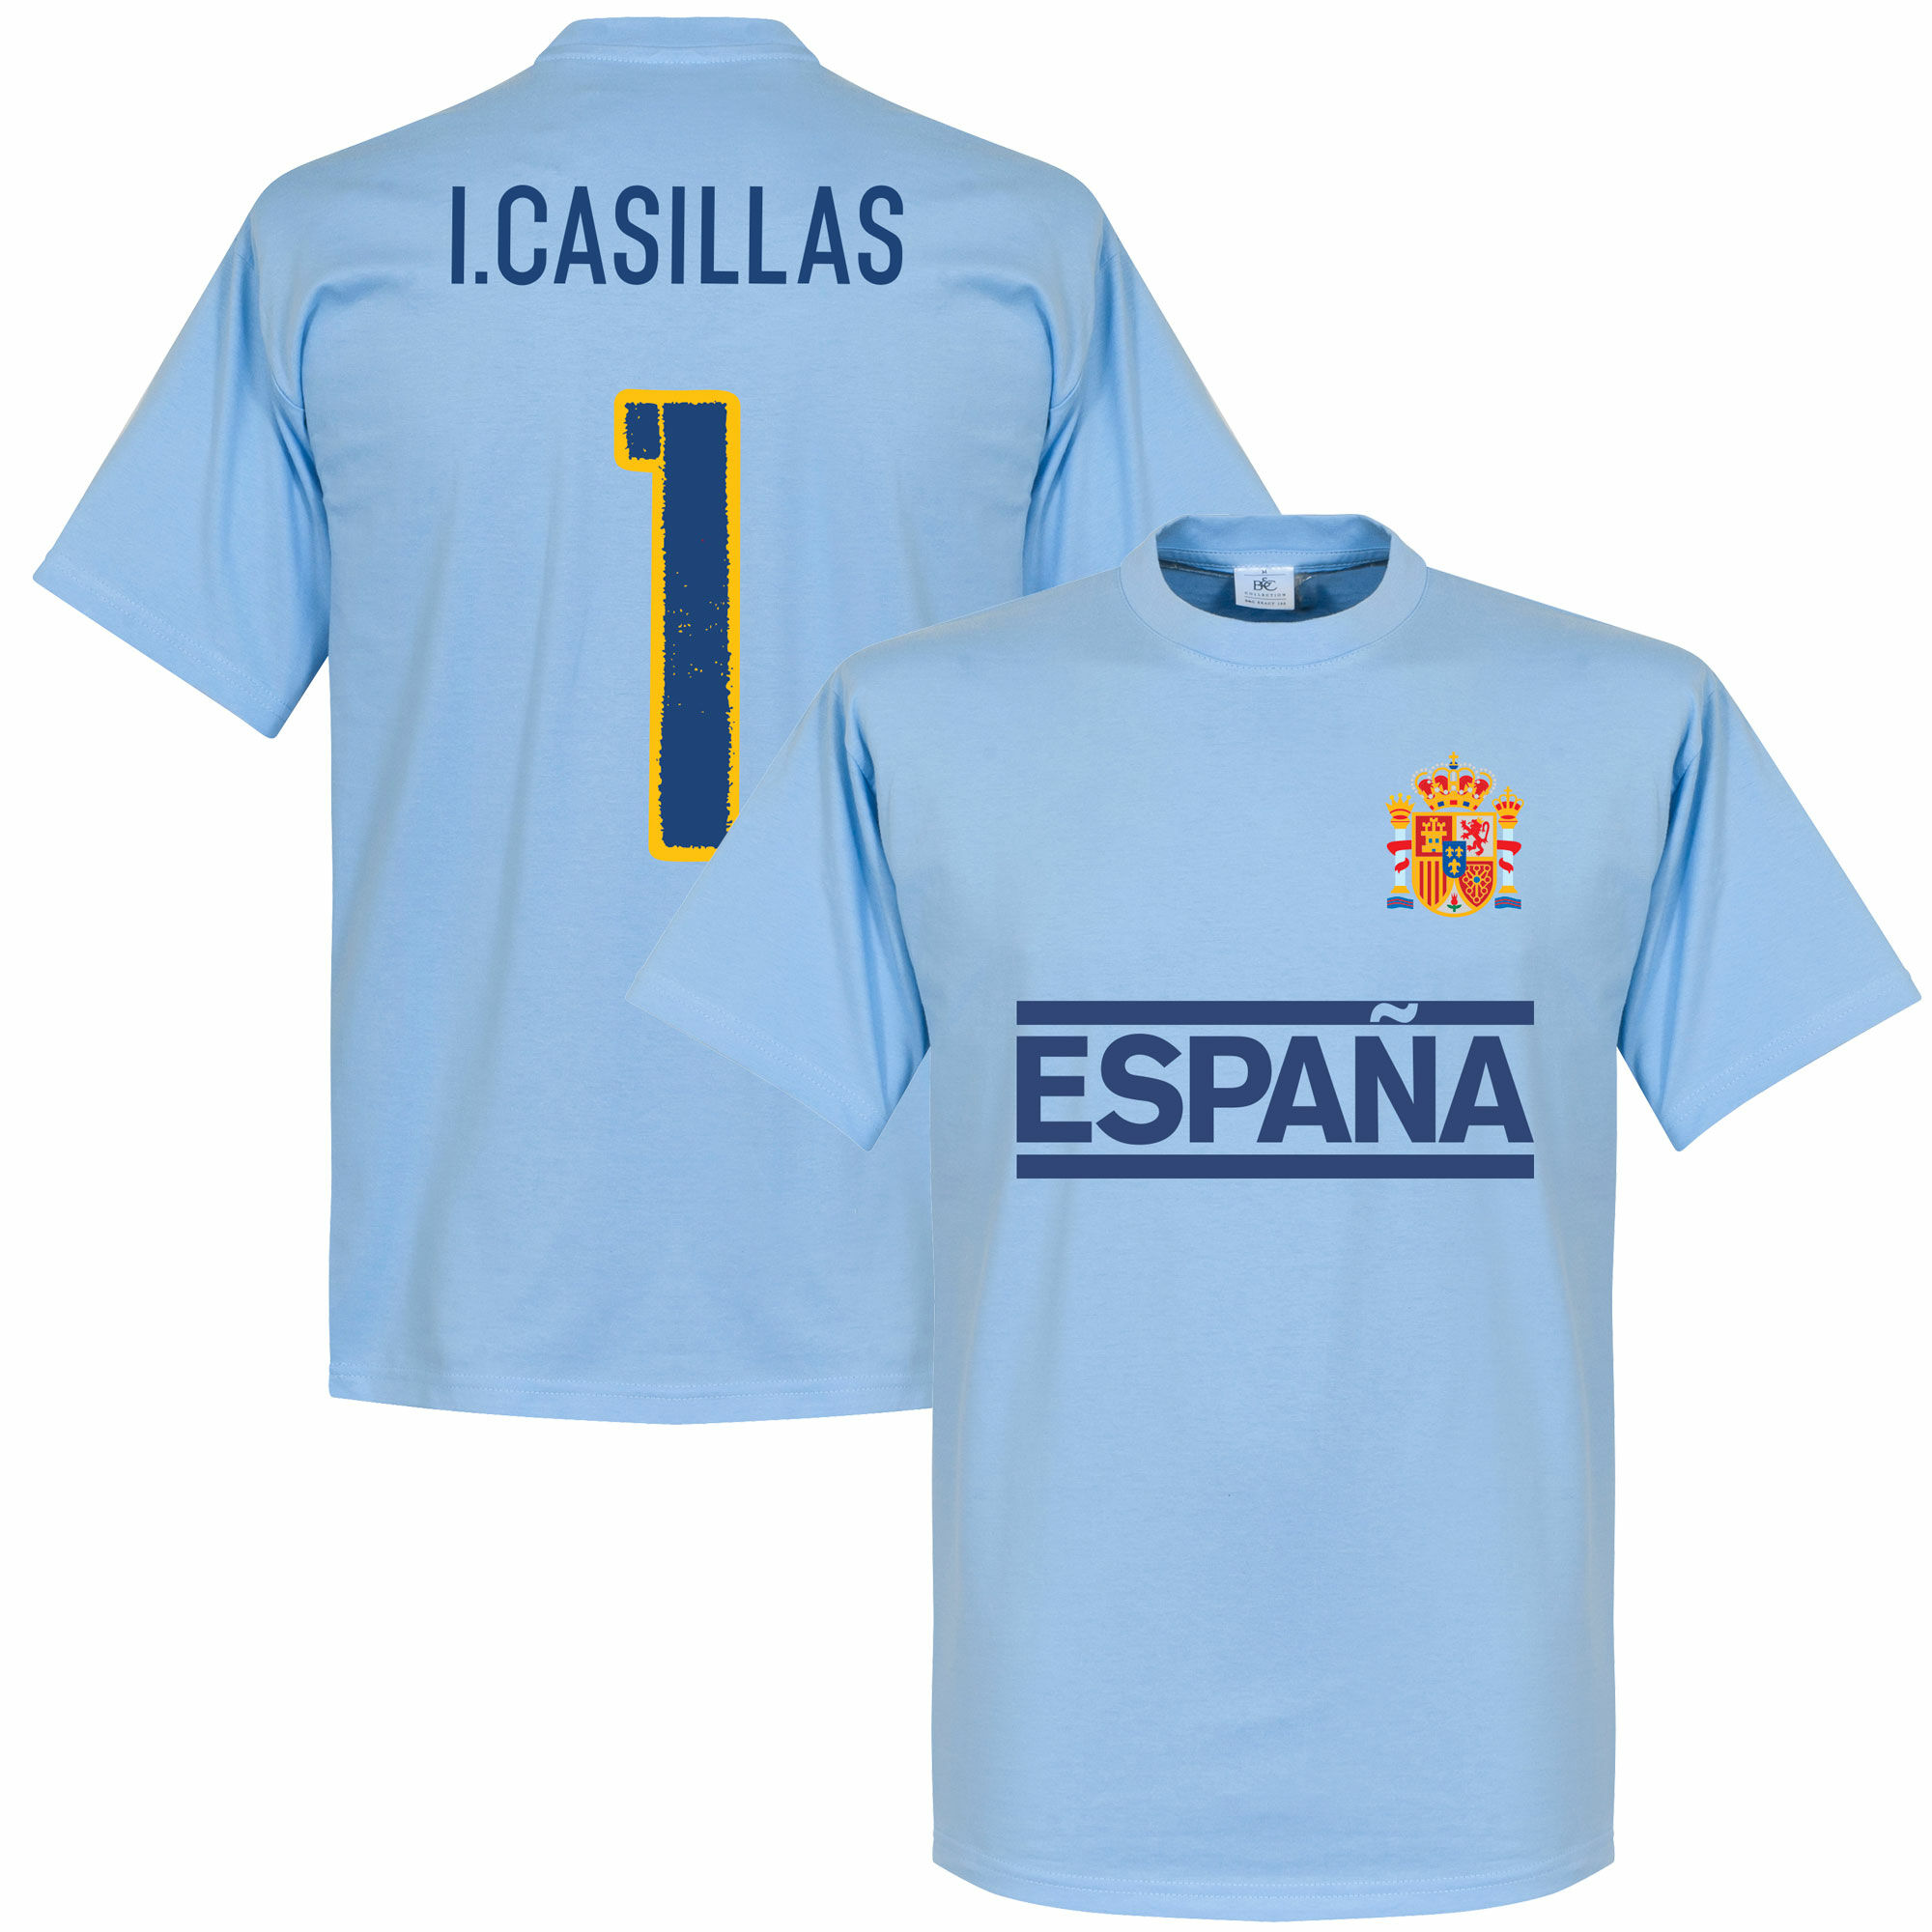 Španělsko - Tričko - Iker Casillas, modré